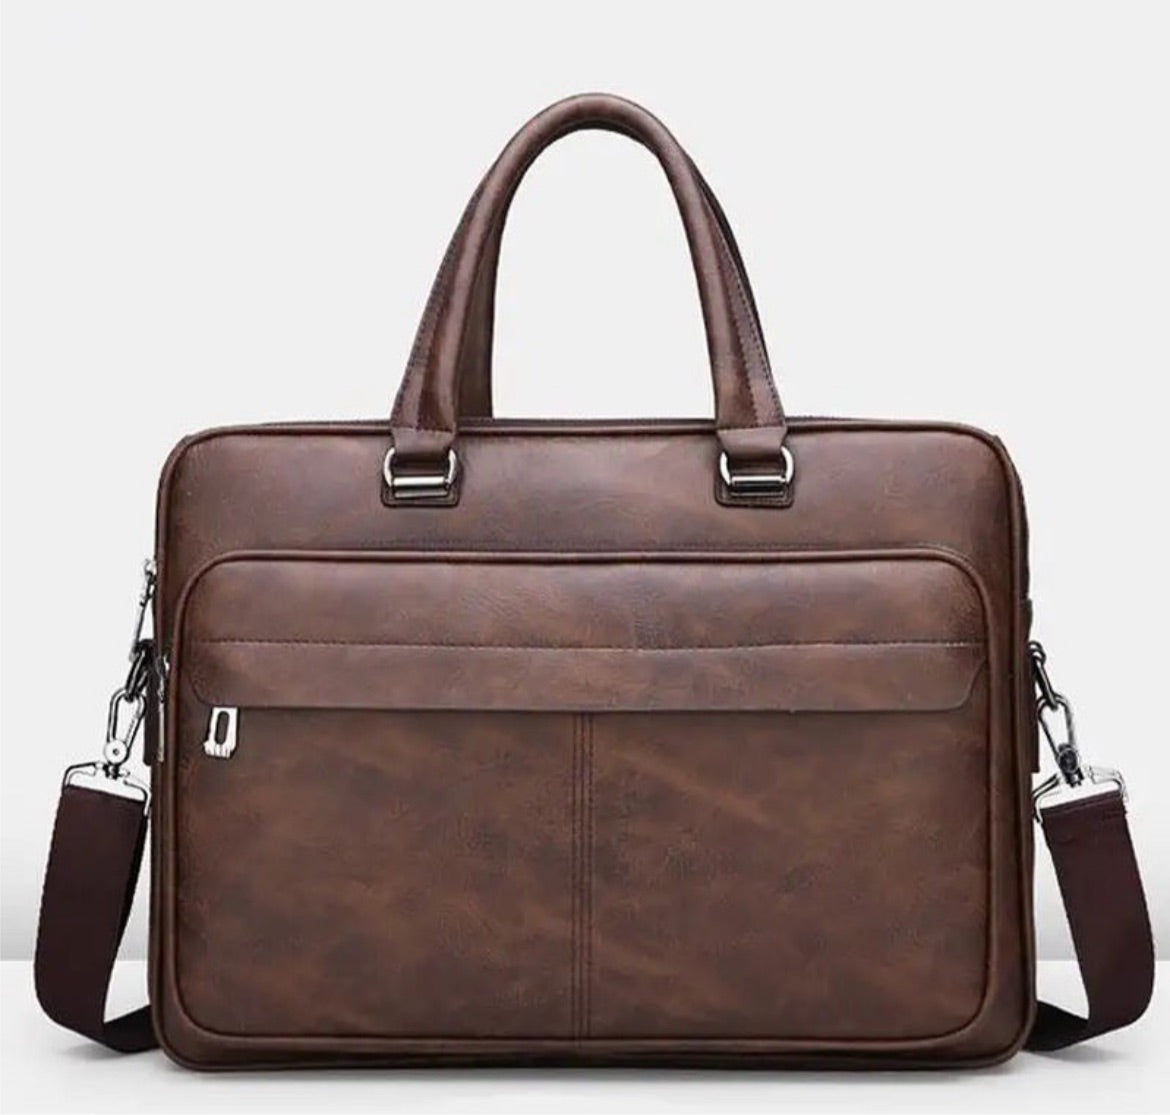 Men's laptop bag in brown